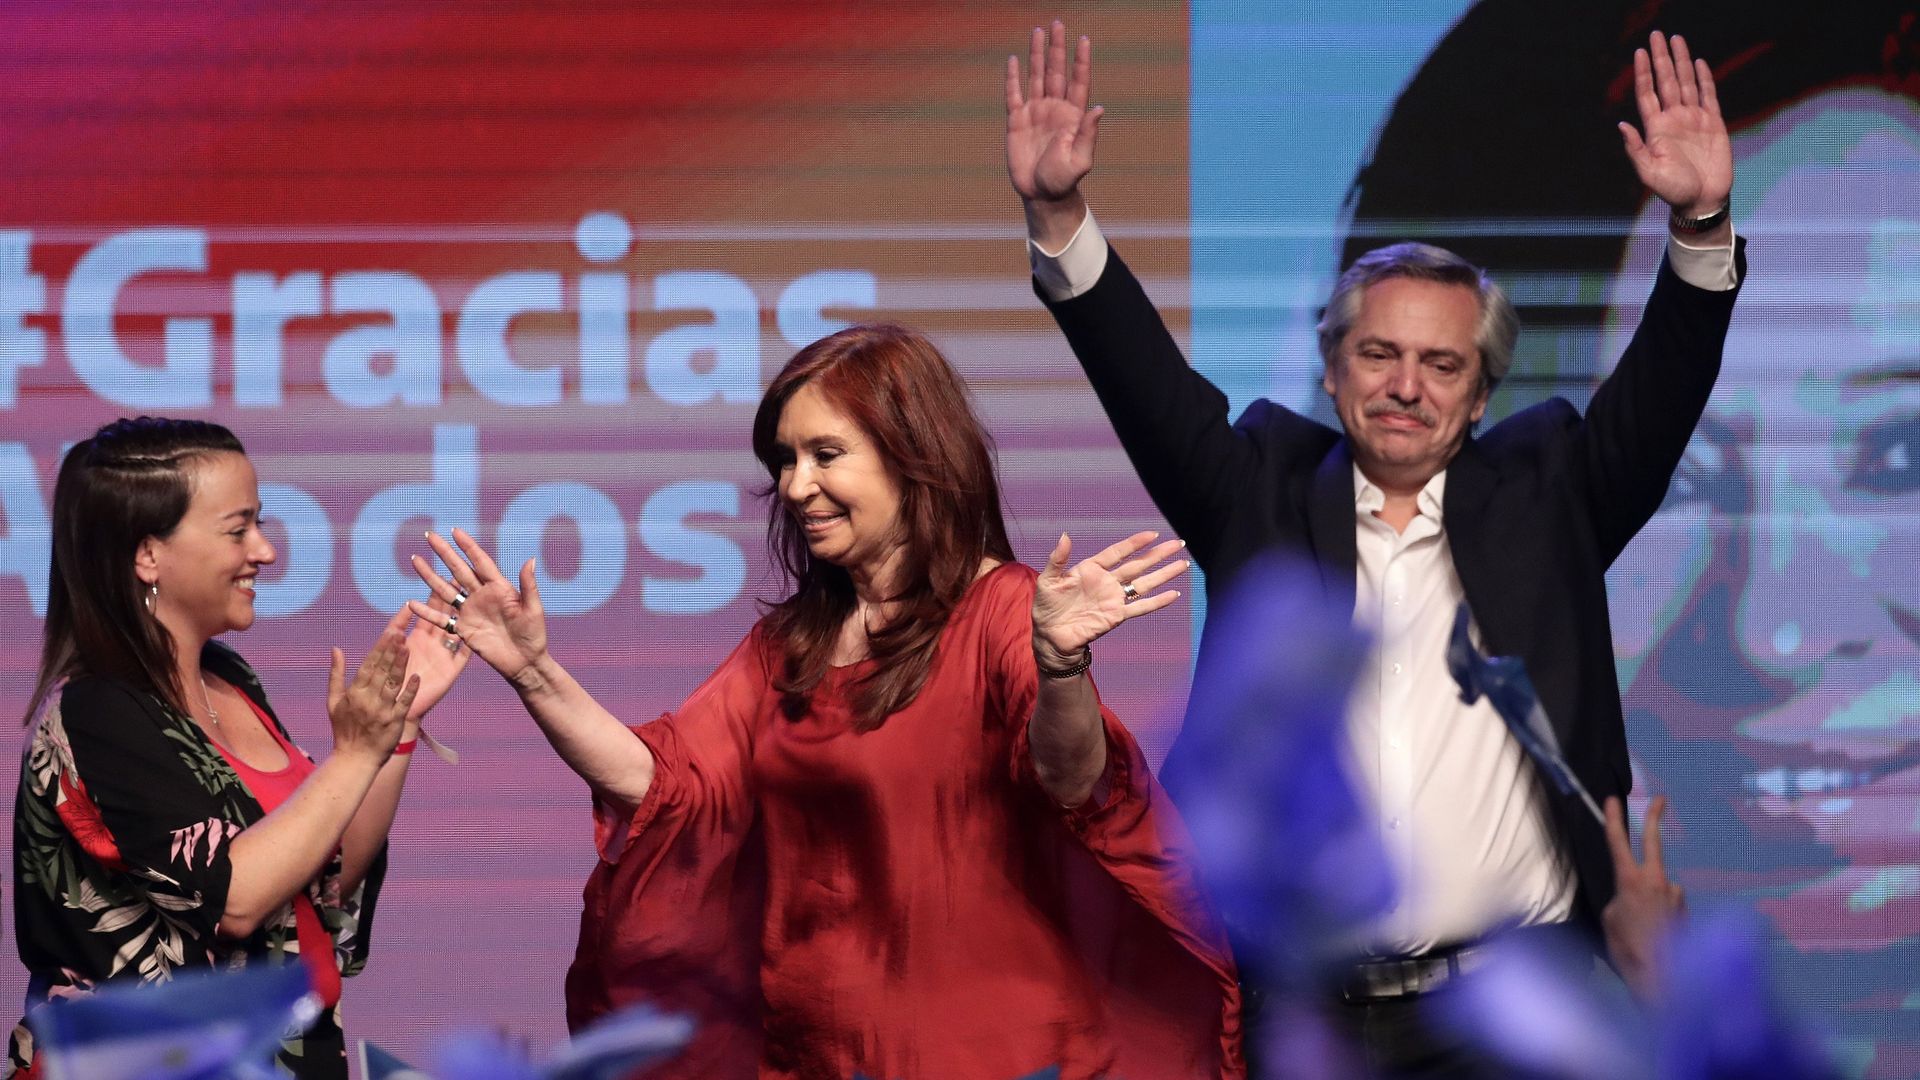 Alberto Fernandez and Cristina Fernandez de Kirchner on stage celebrating victory